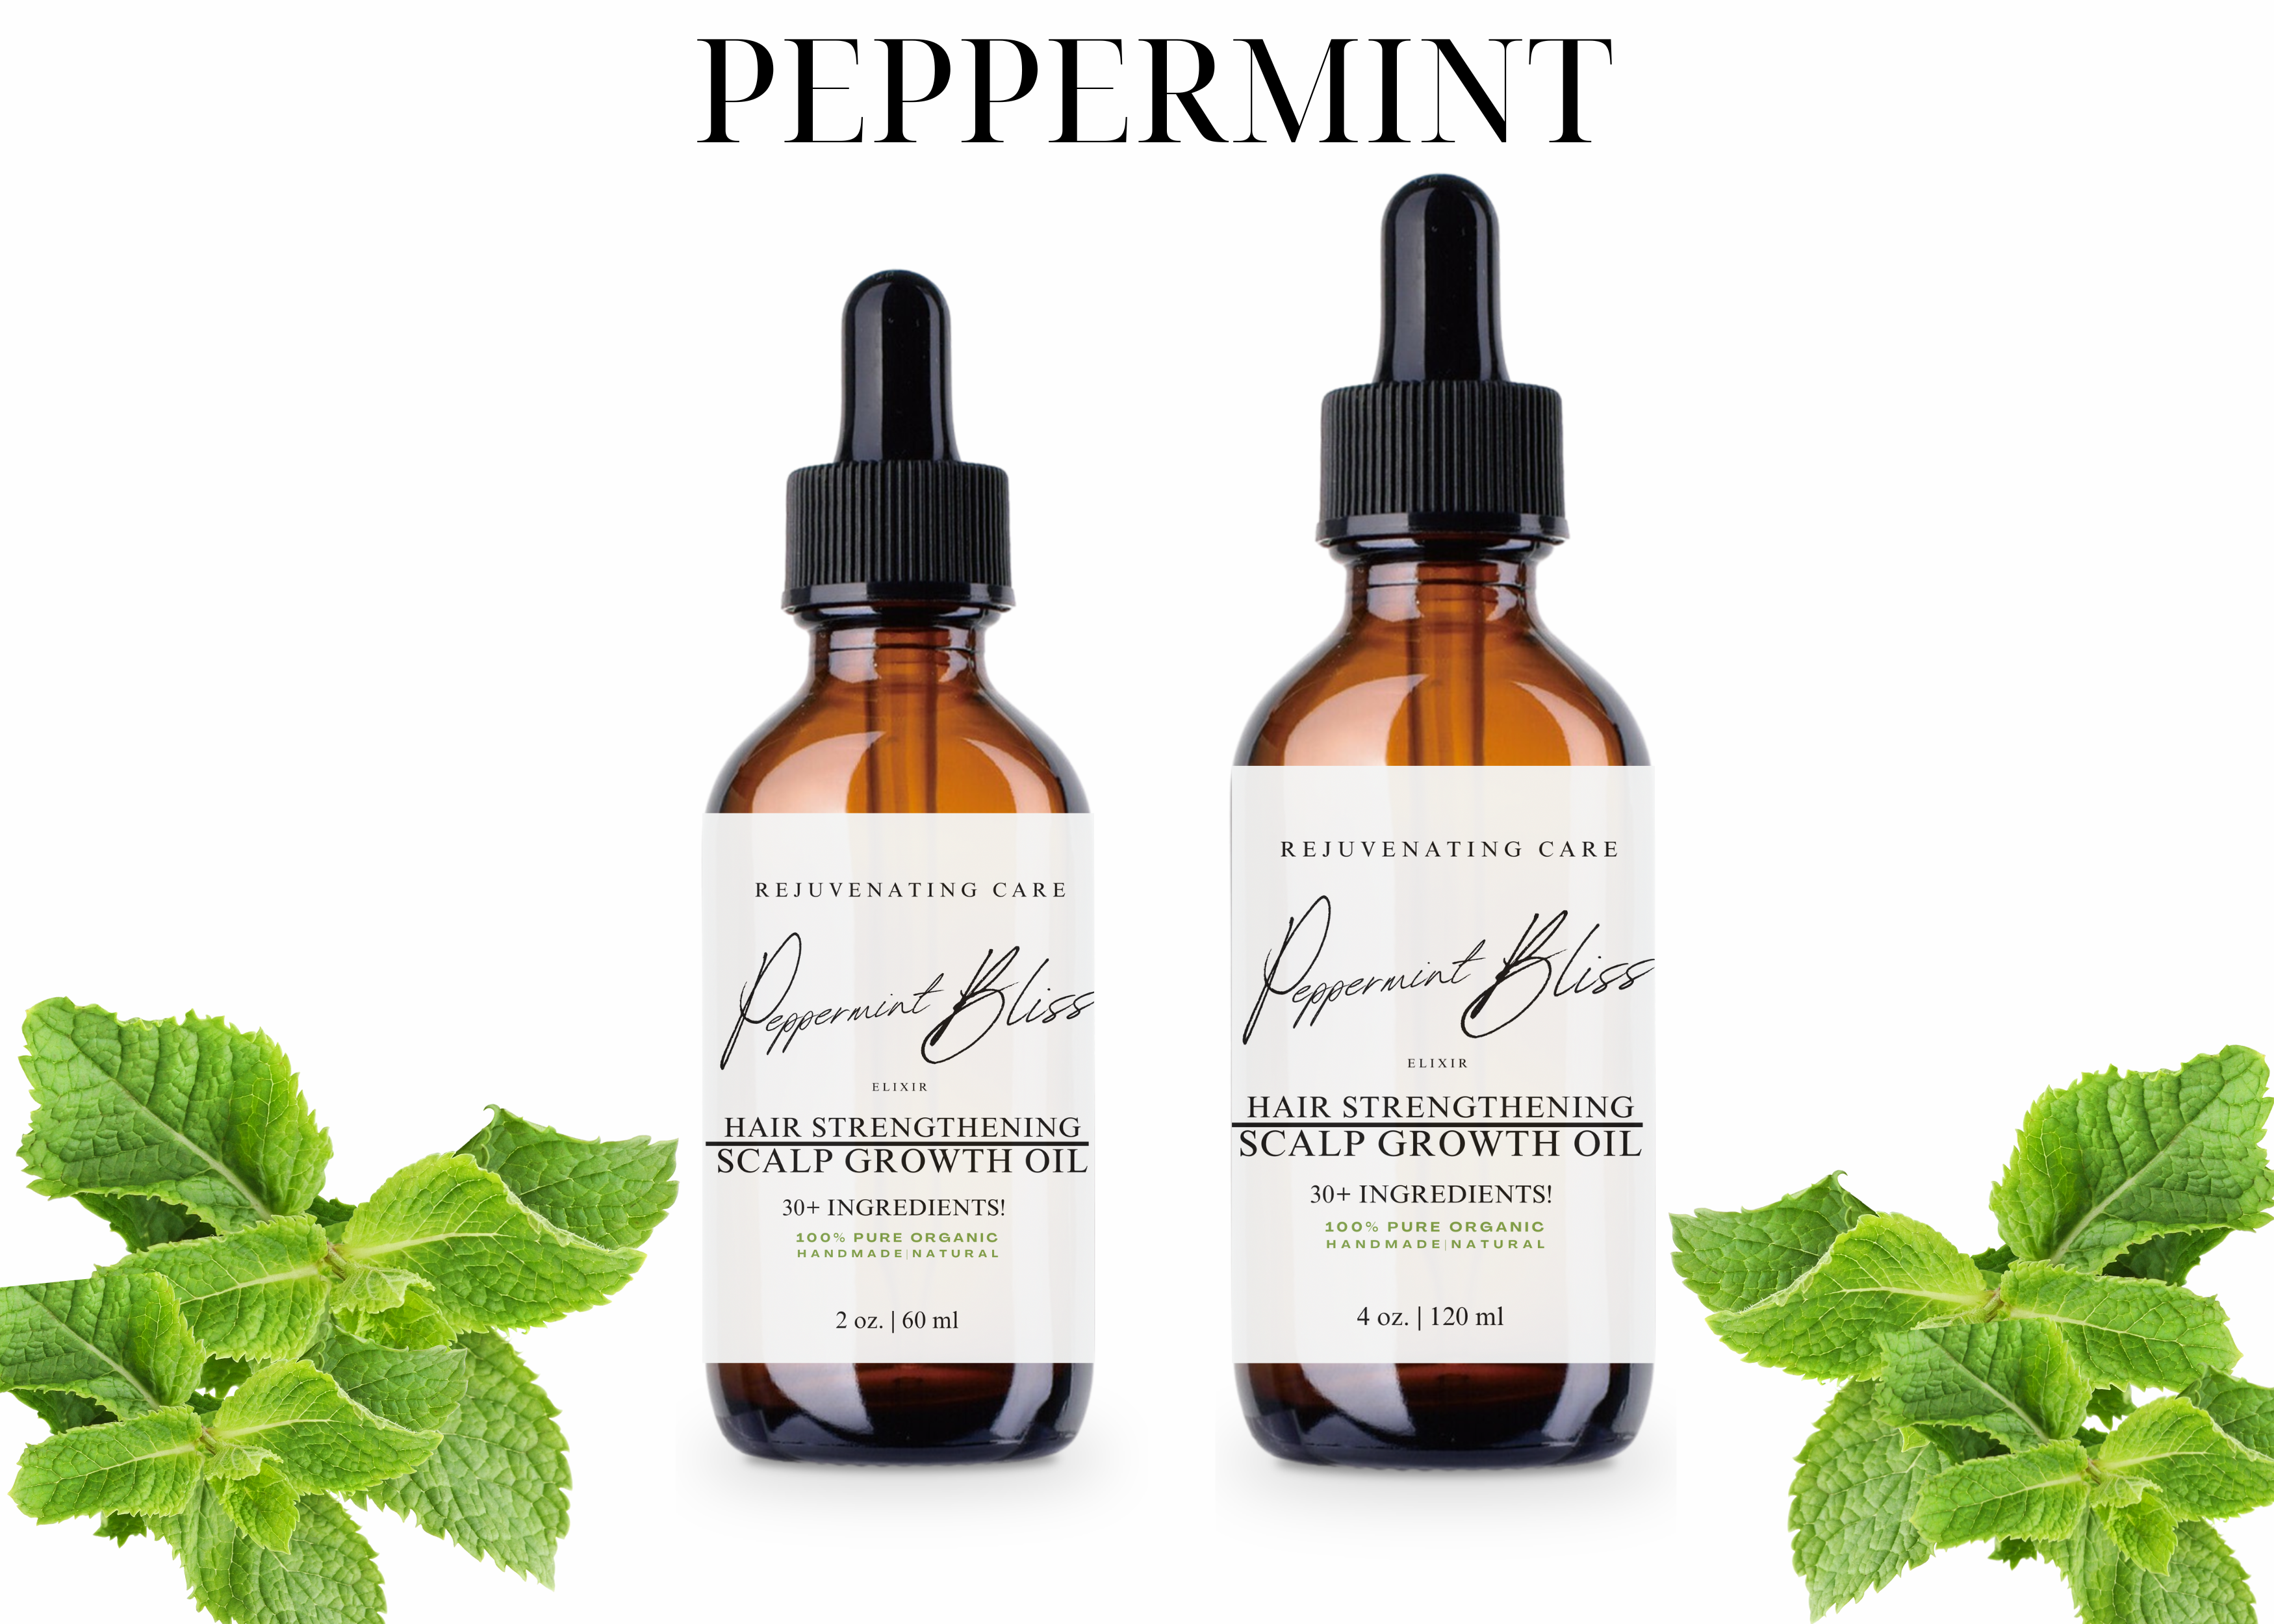 Peppermint Hair Strengthening and Scalp Growth Oil 4 ounce